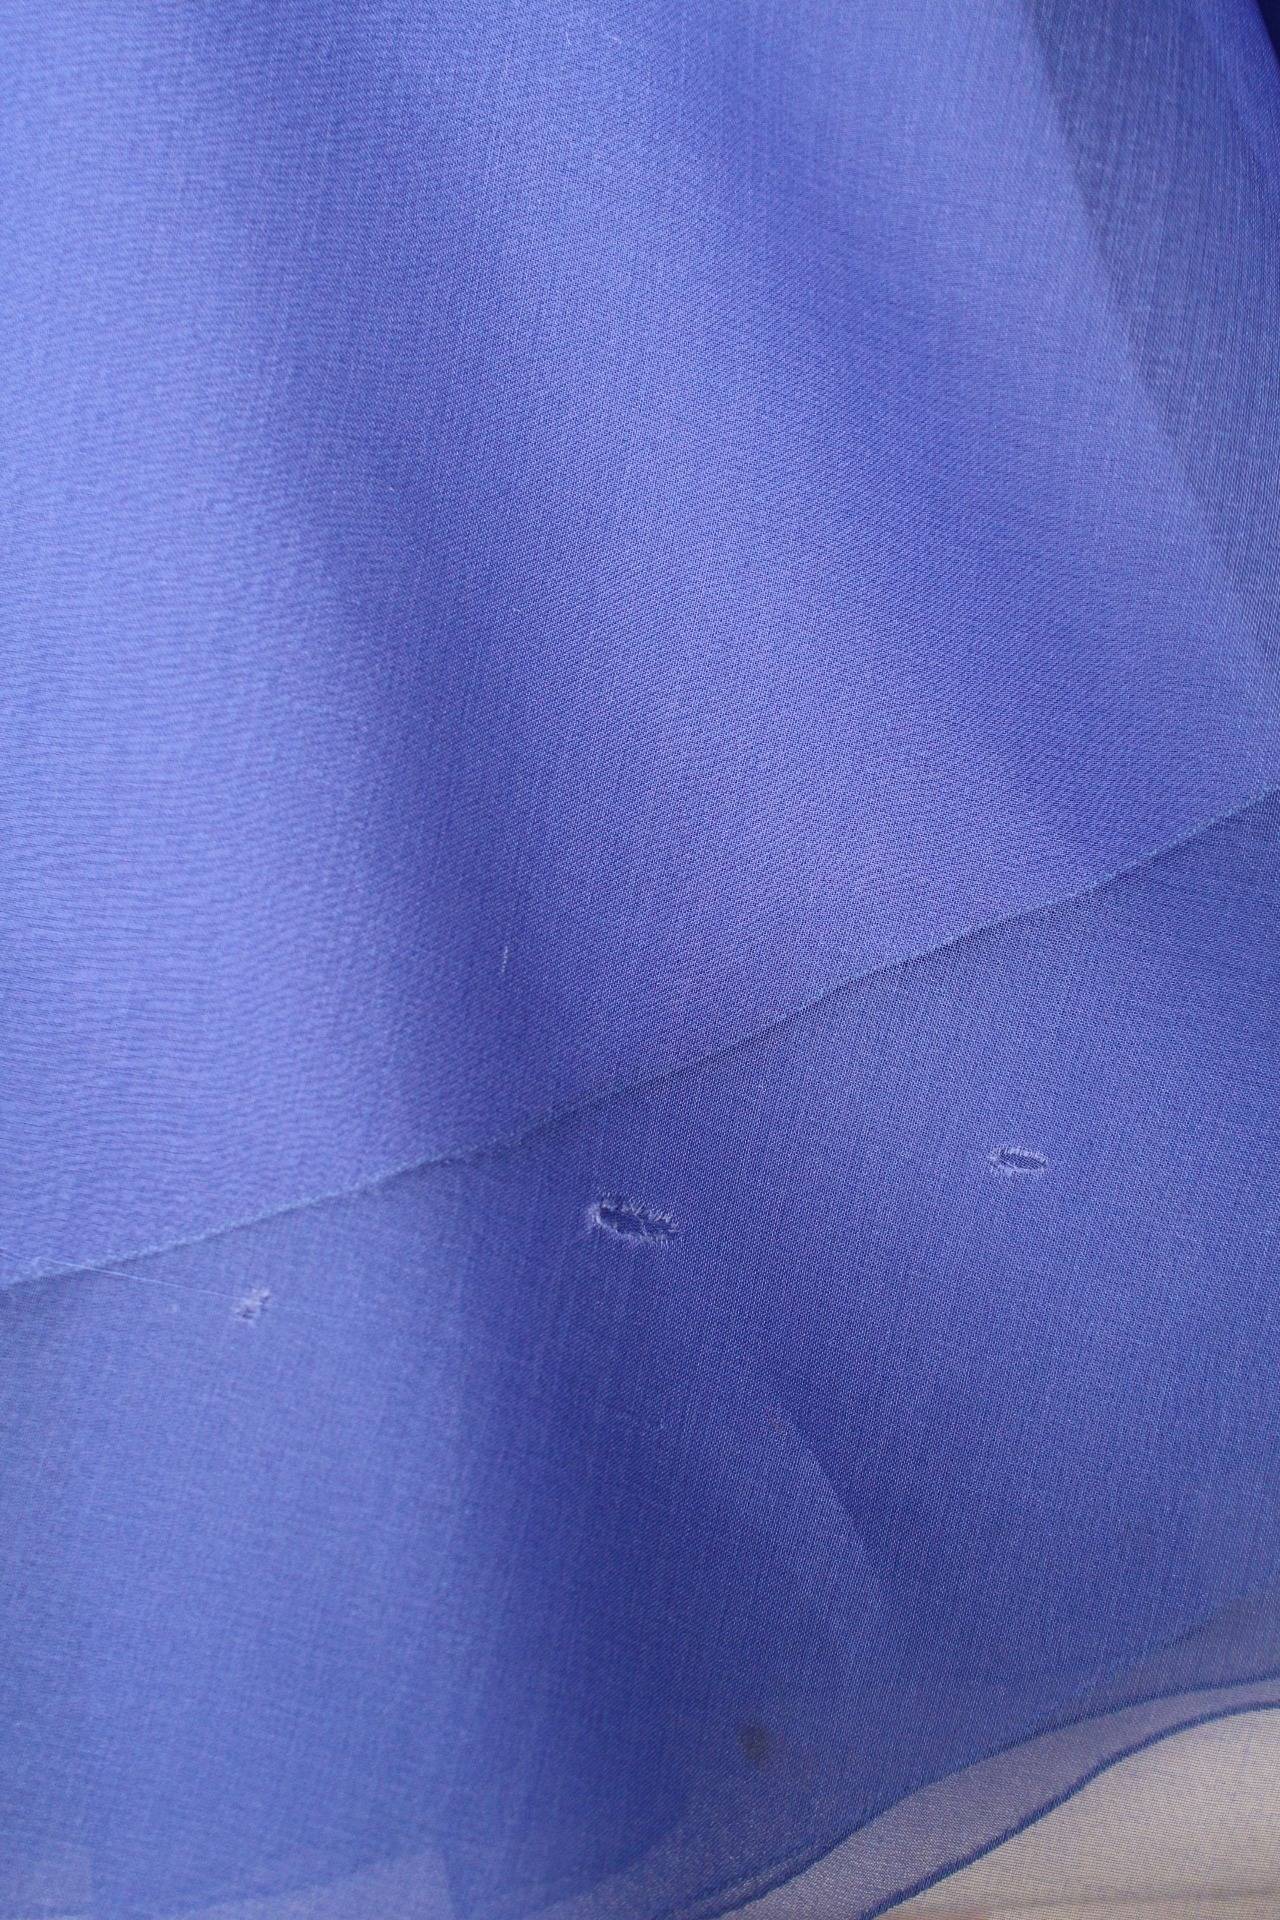 Jean-Louis Scherrer Haute Couture Blue Organza Evening Gown, 1980s  For Sale 2